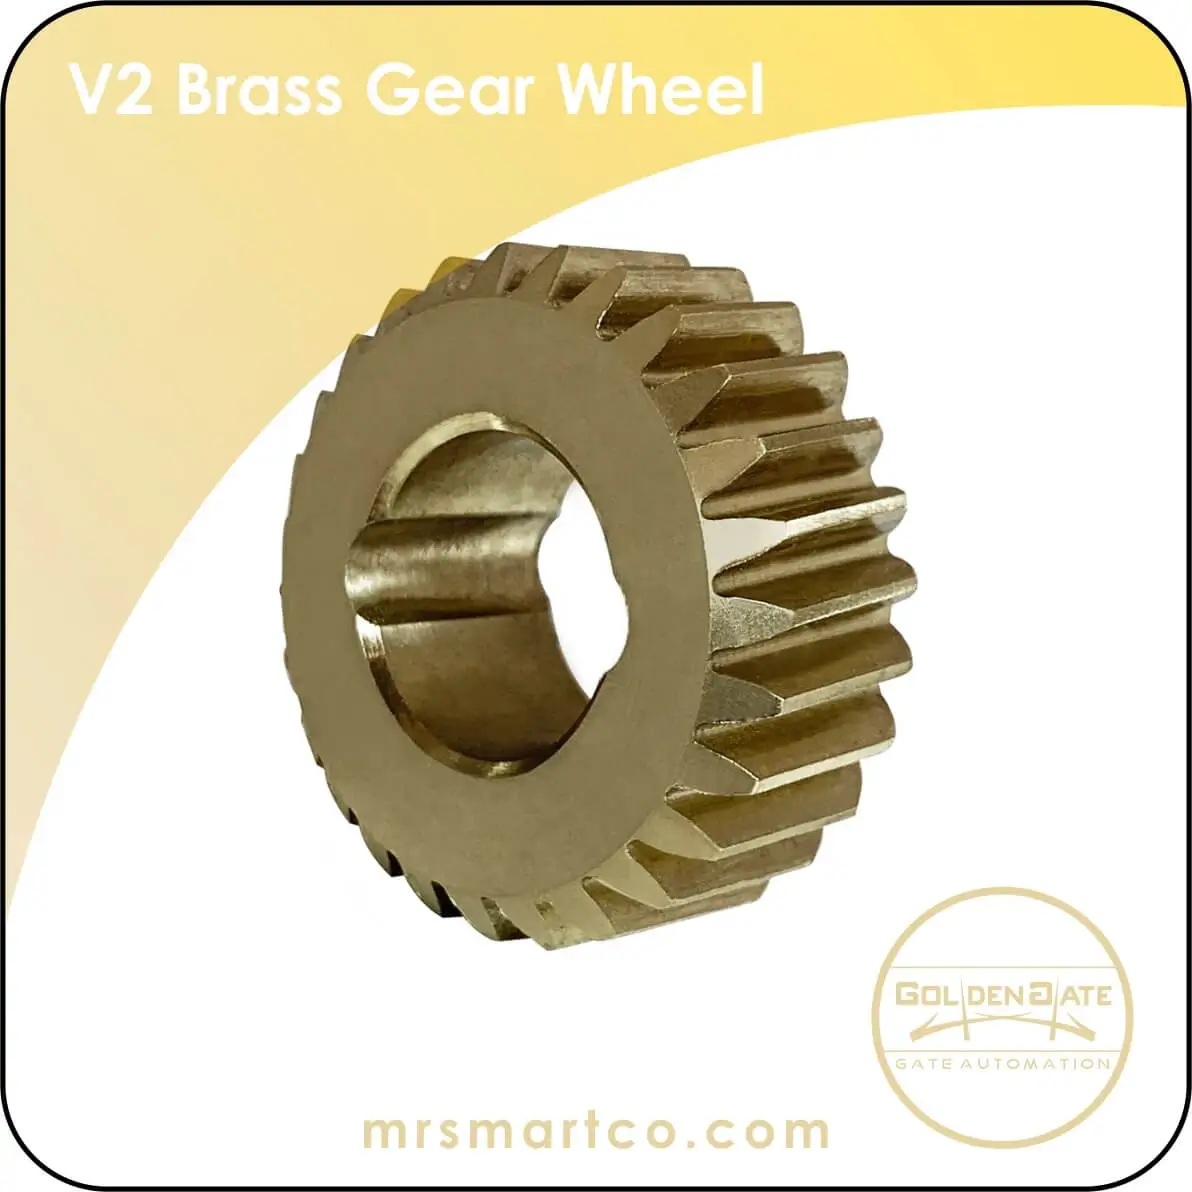 V2 Brass Gear Wheel